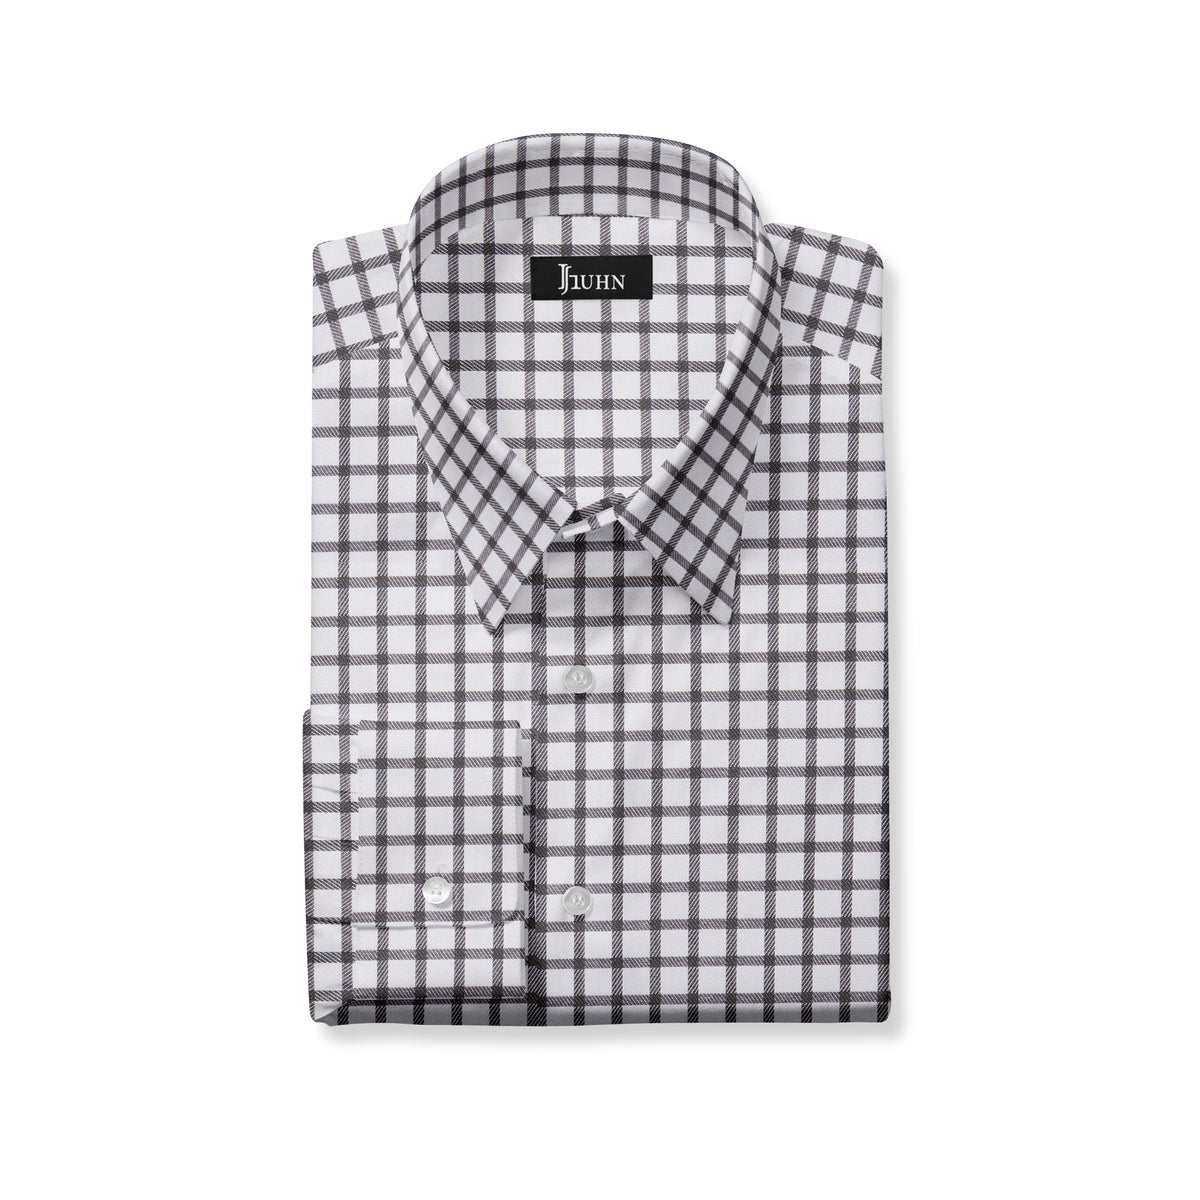 Board Room Men's Shirt in Black Grid Check – JHuhn Lifestyle